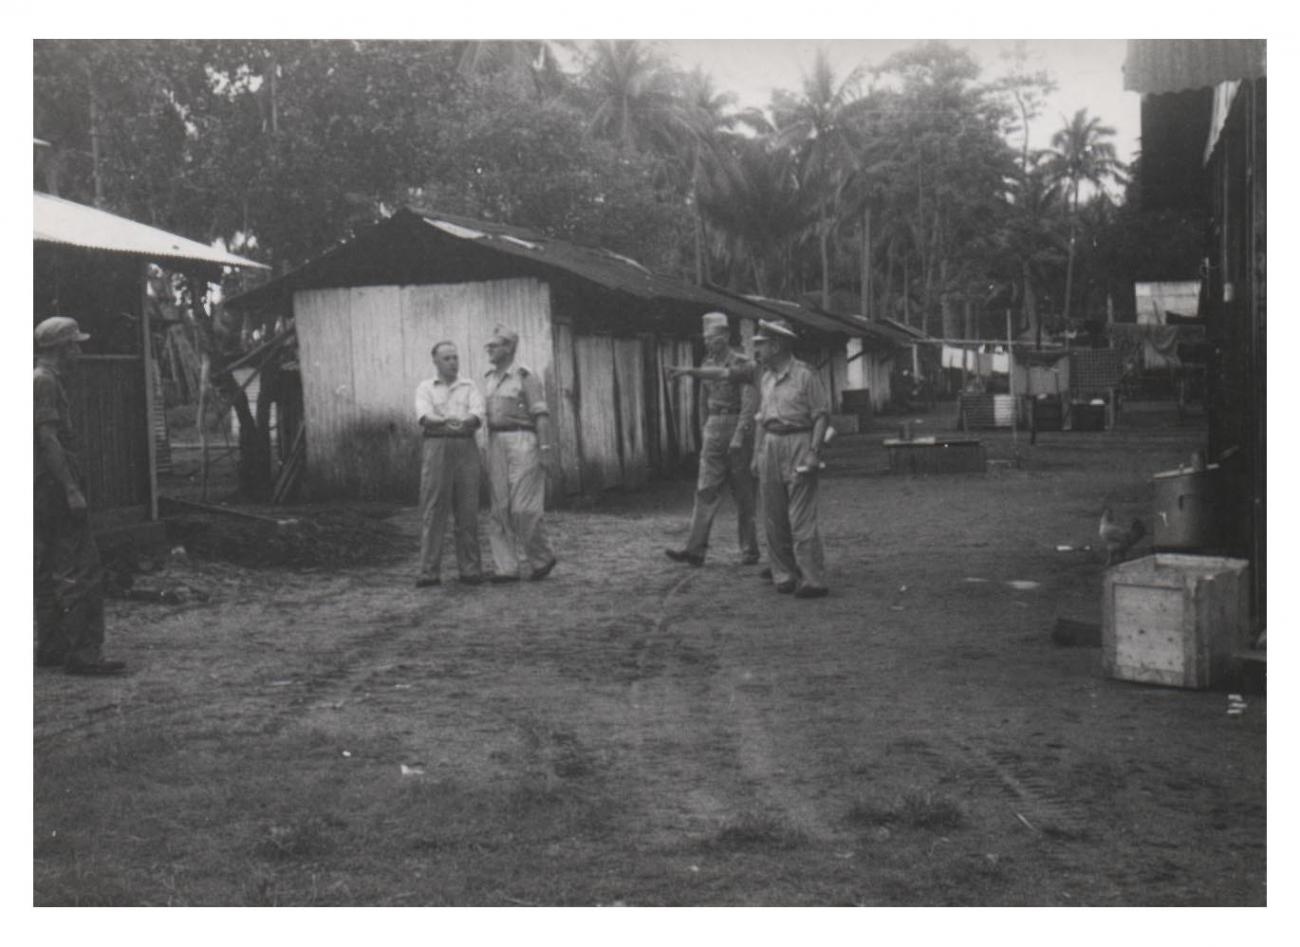 BD/54/34 - 
Kampong Kompol I, Merauke
